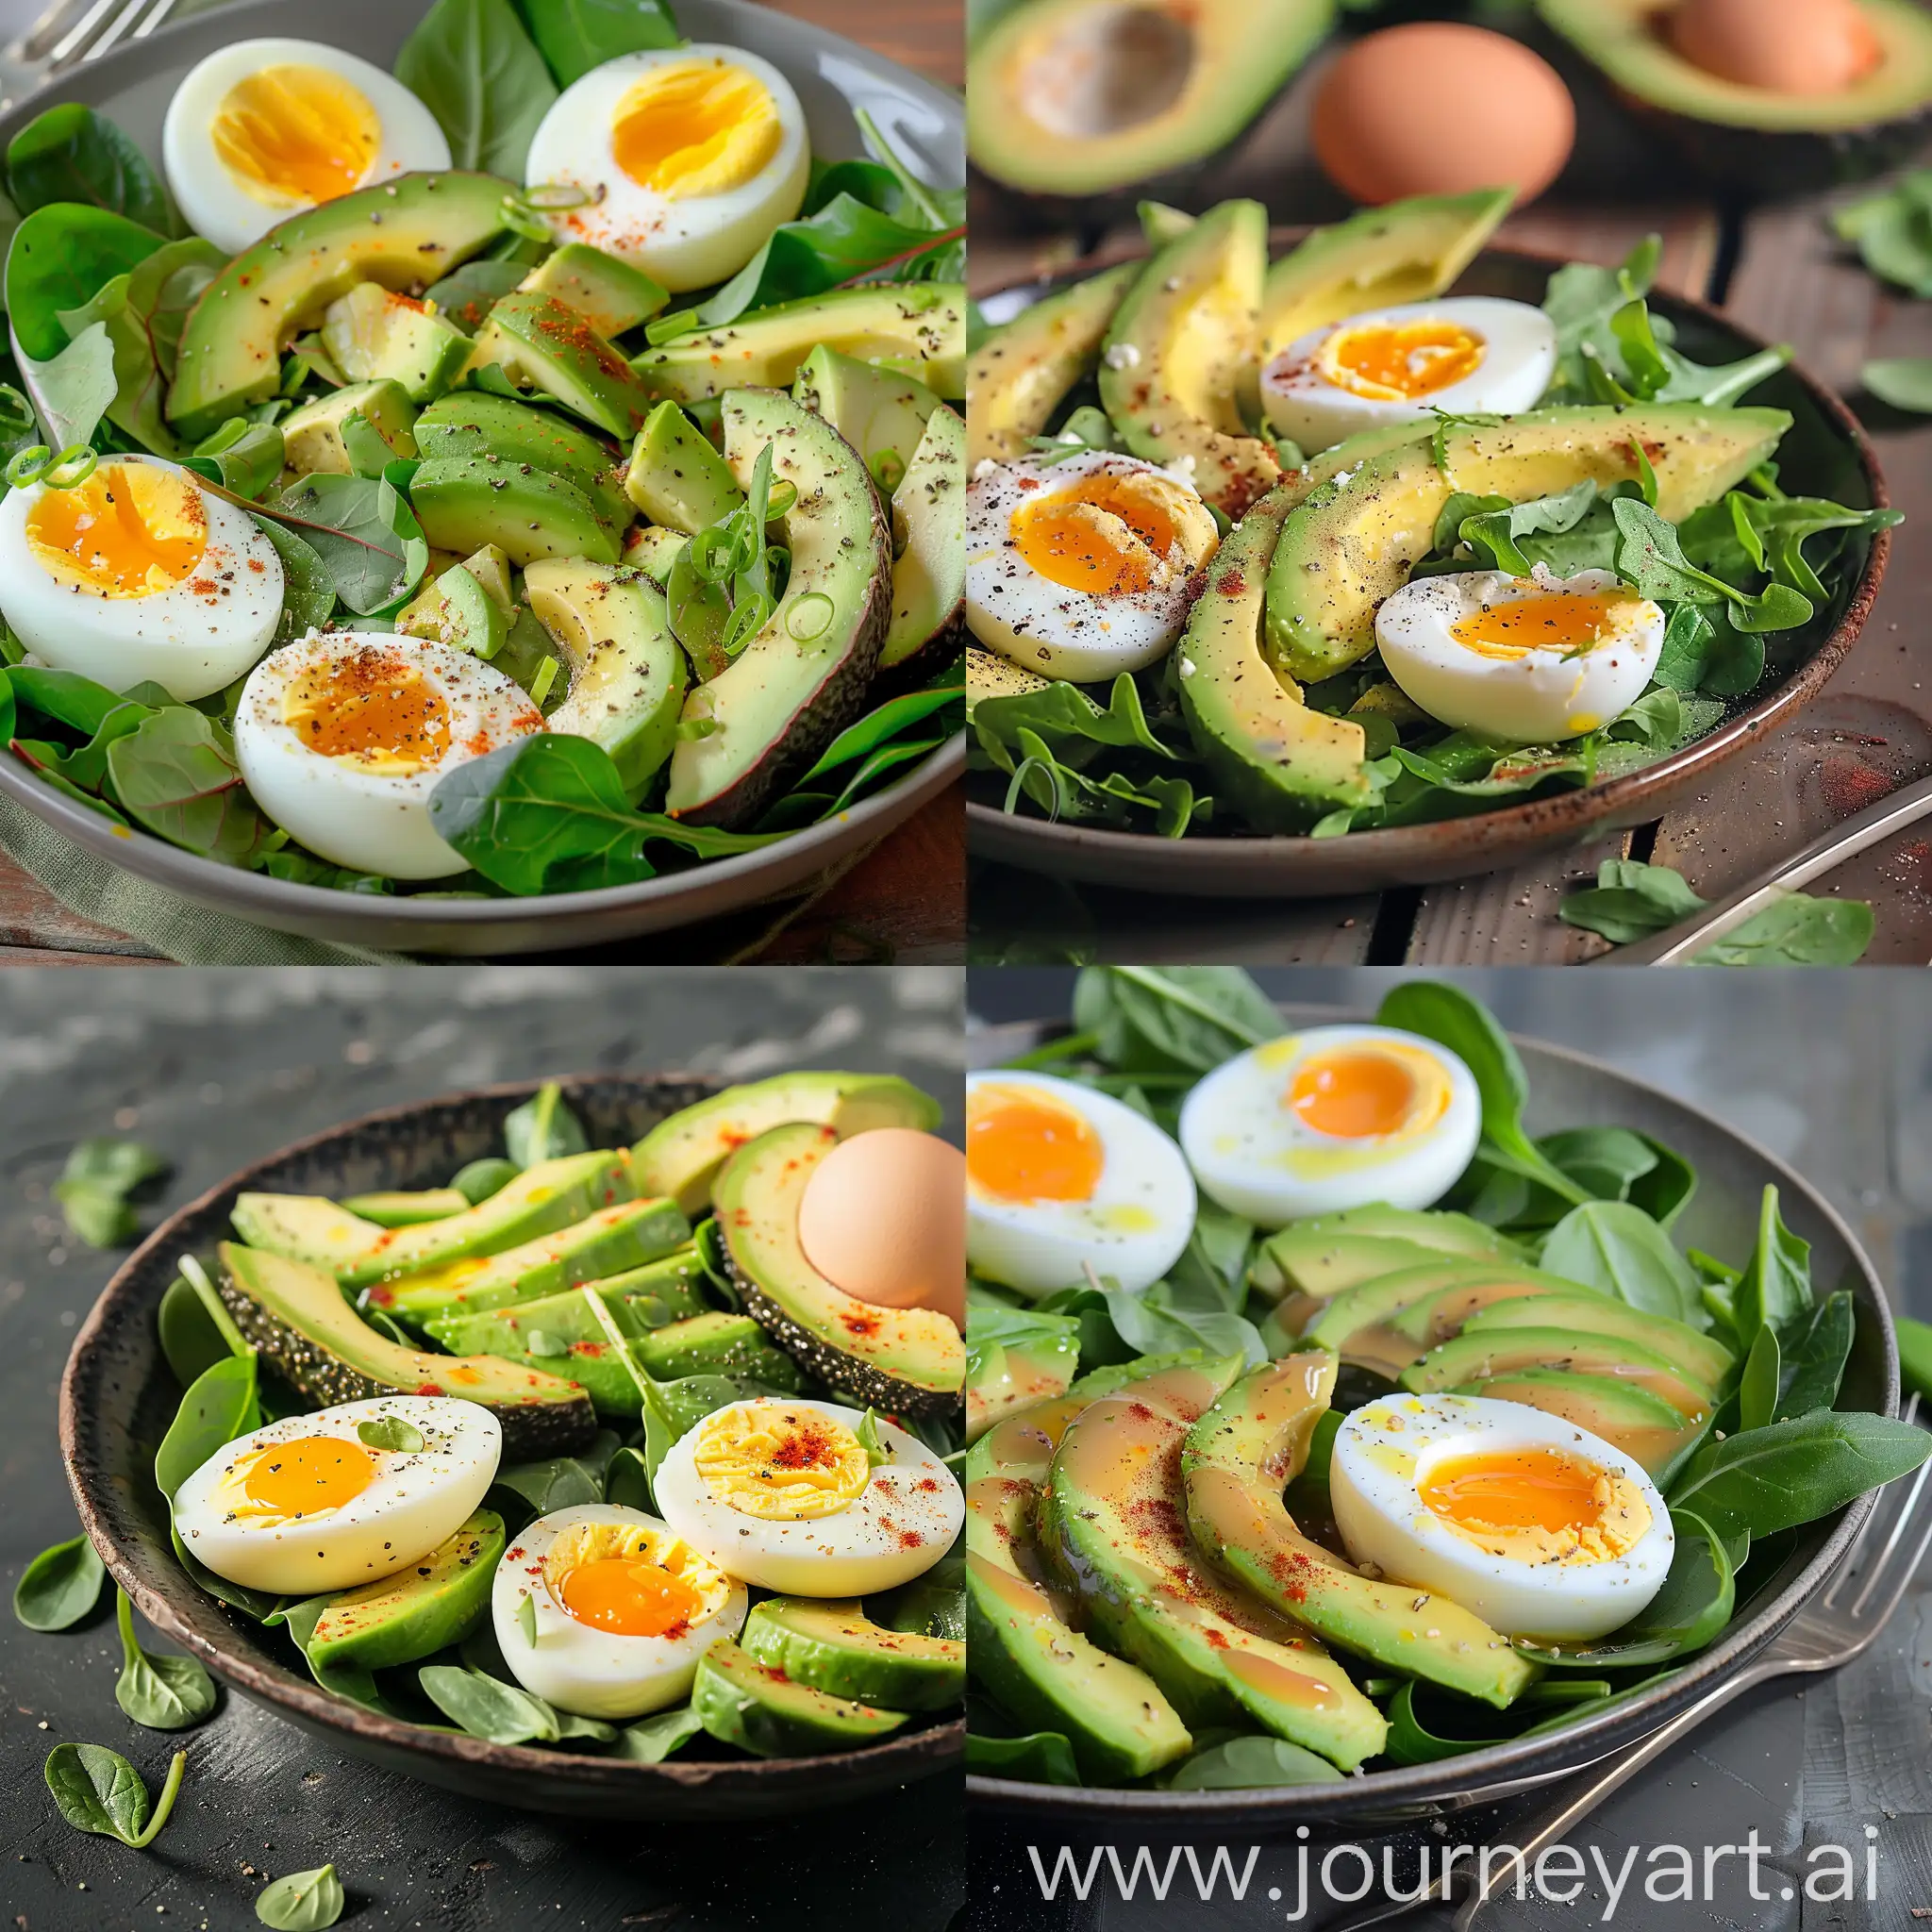 Fresh-Avocado-and-Egg-Salad-with-Salad-Leaves